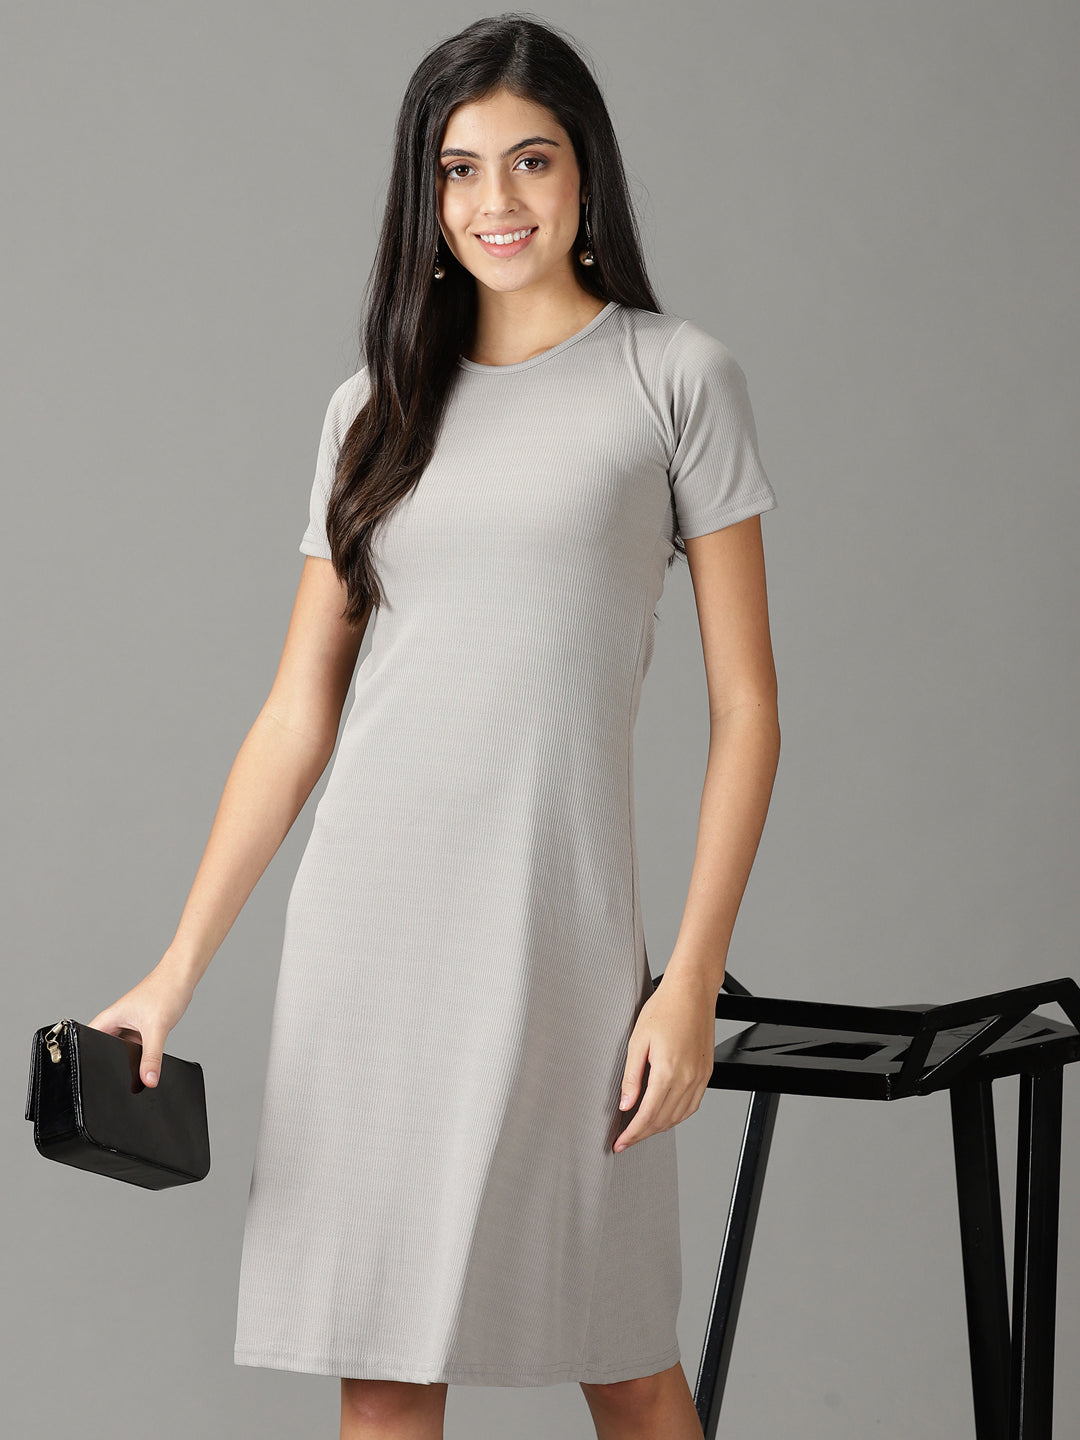 Women's Grey Solid A-Line Dress